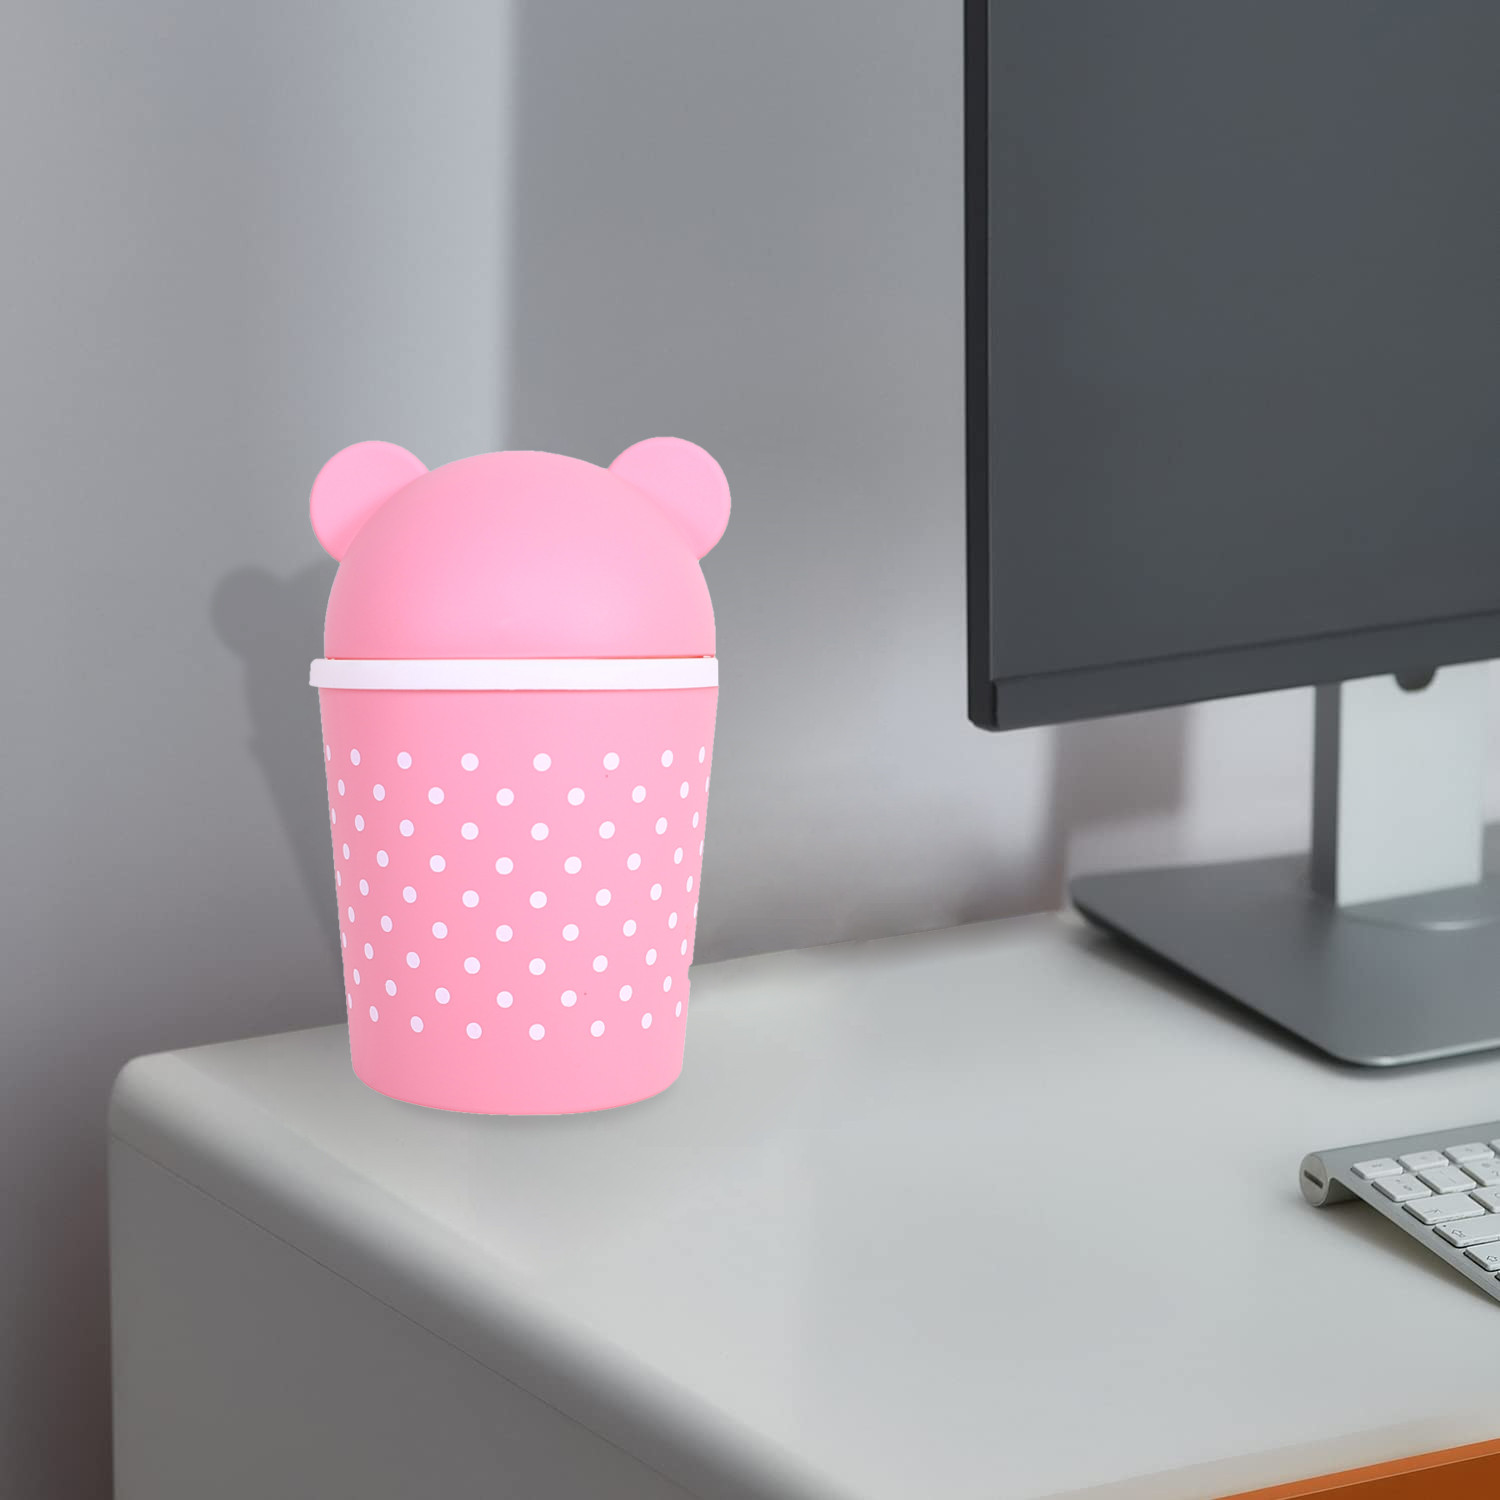 Kuber Industries Teddy Table Dustbin|Plastic Swinging Lid Waste Storage Garbage Bin|Desktop Trash Can For Study Table, Office(Pink)